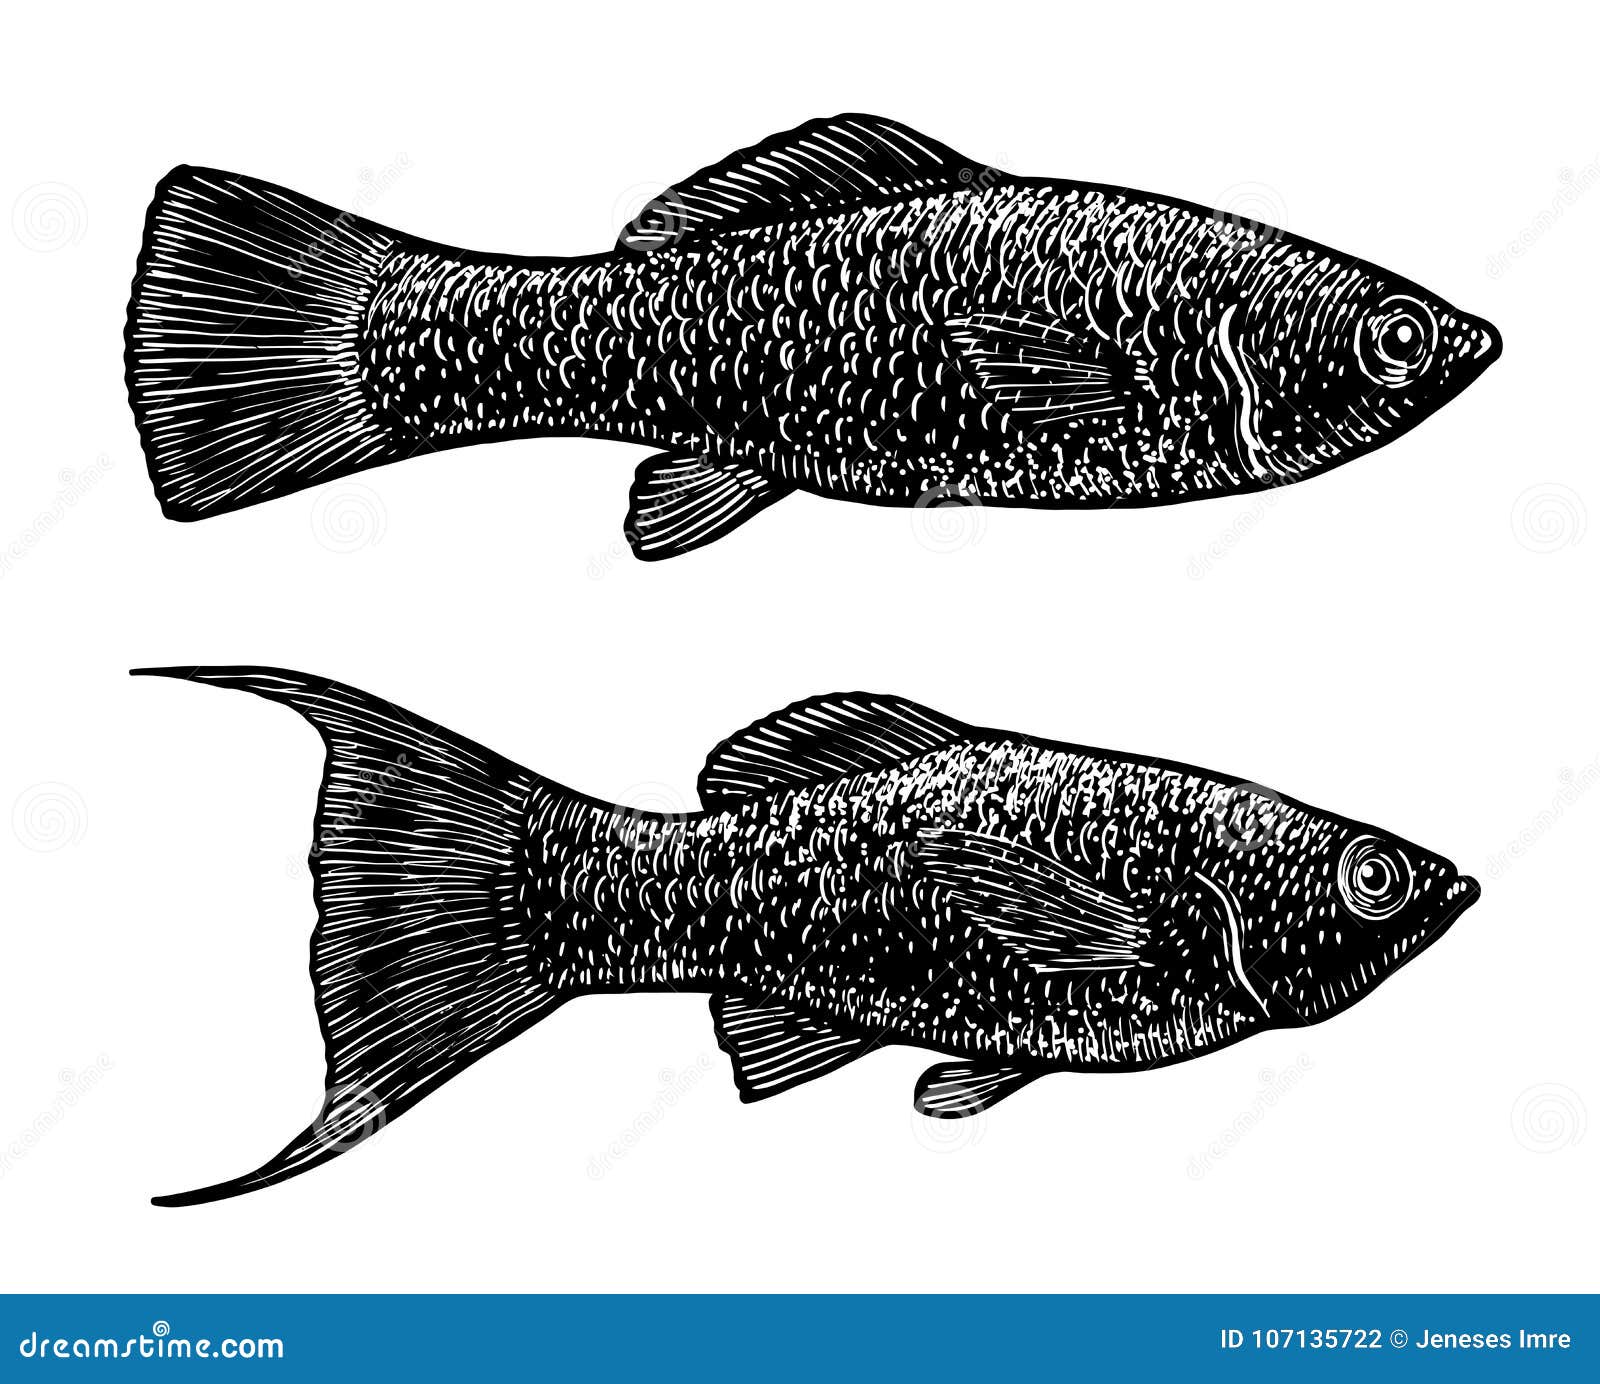 Как отличить моллинезий. Моллинезия самка и самец отличие. Моллинезия самец и самка. Моллинезия чёрная самец и самка. Моллинезия рыбка самец.